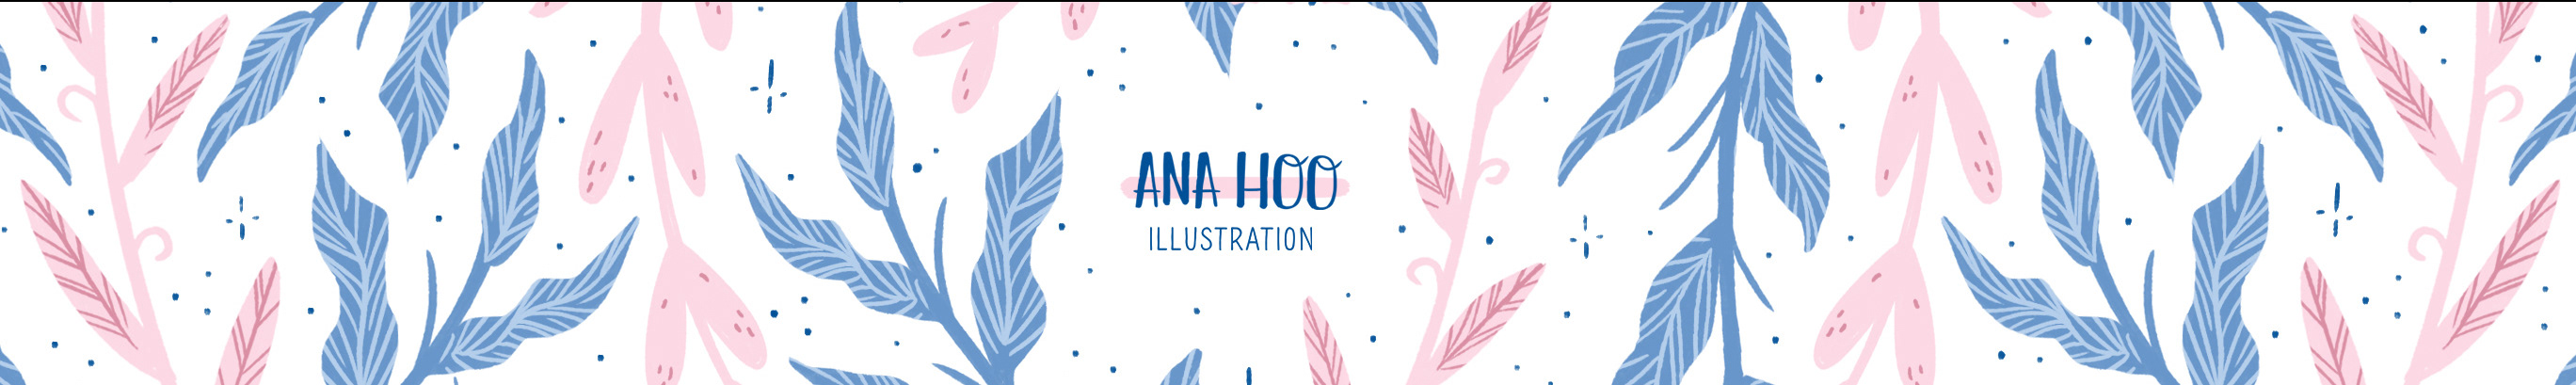 Banner profilu uživatele ANA HOO